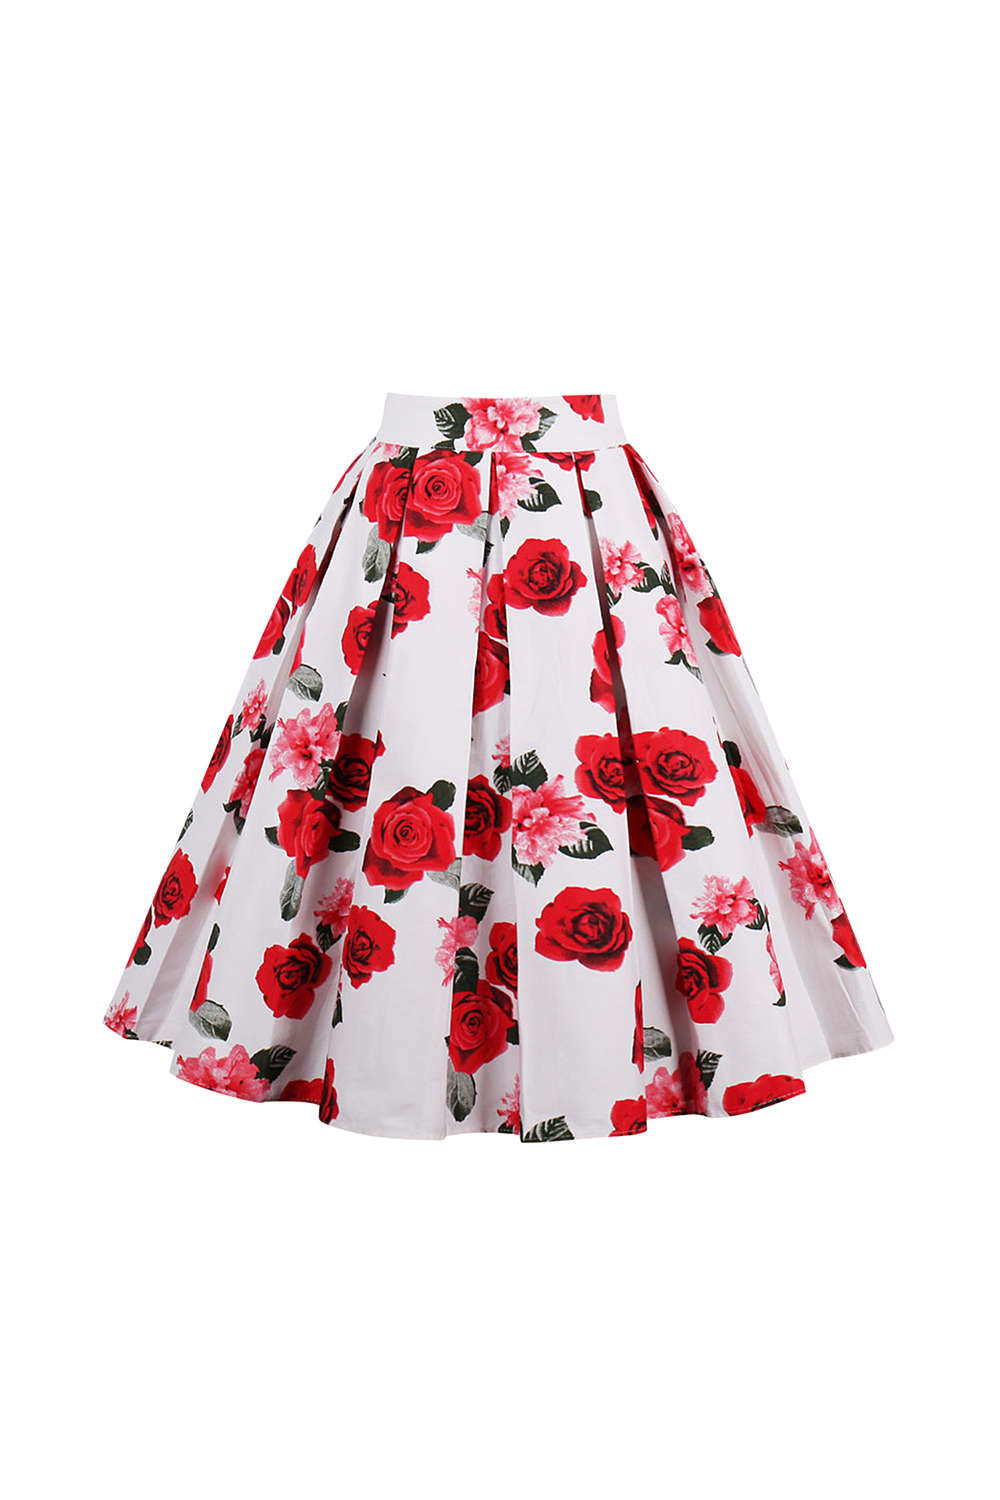 Iyasson High Waist Midi Skirt Floral Printed Pleated Skirt